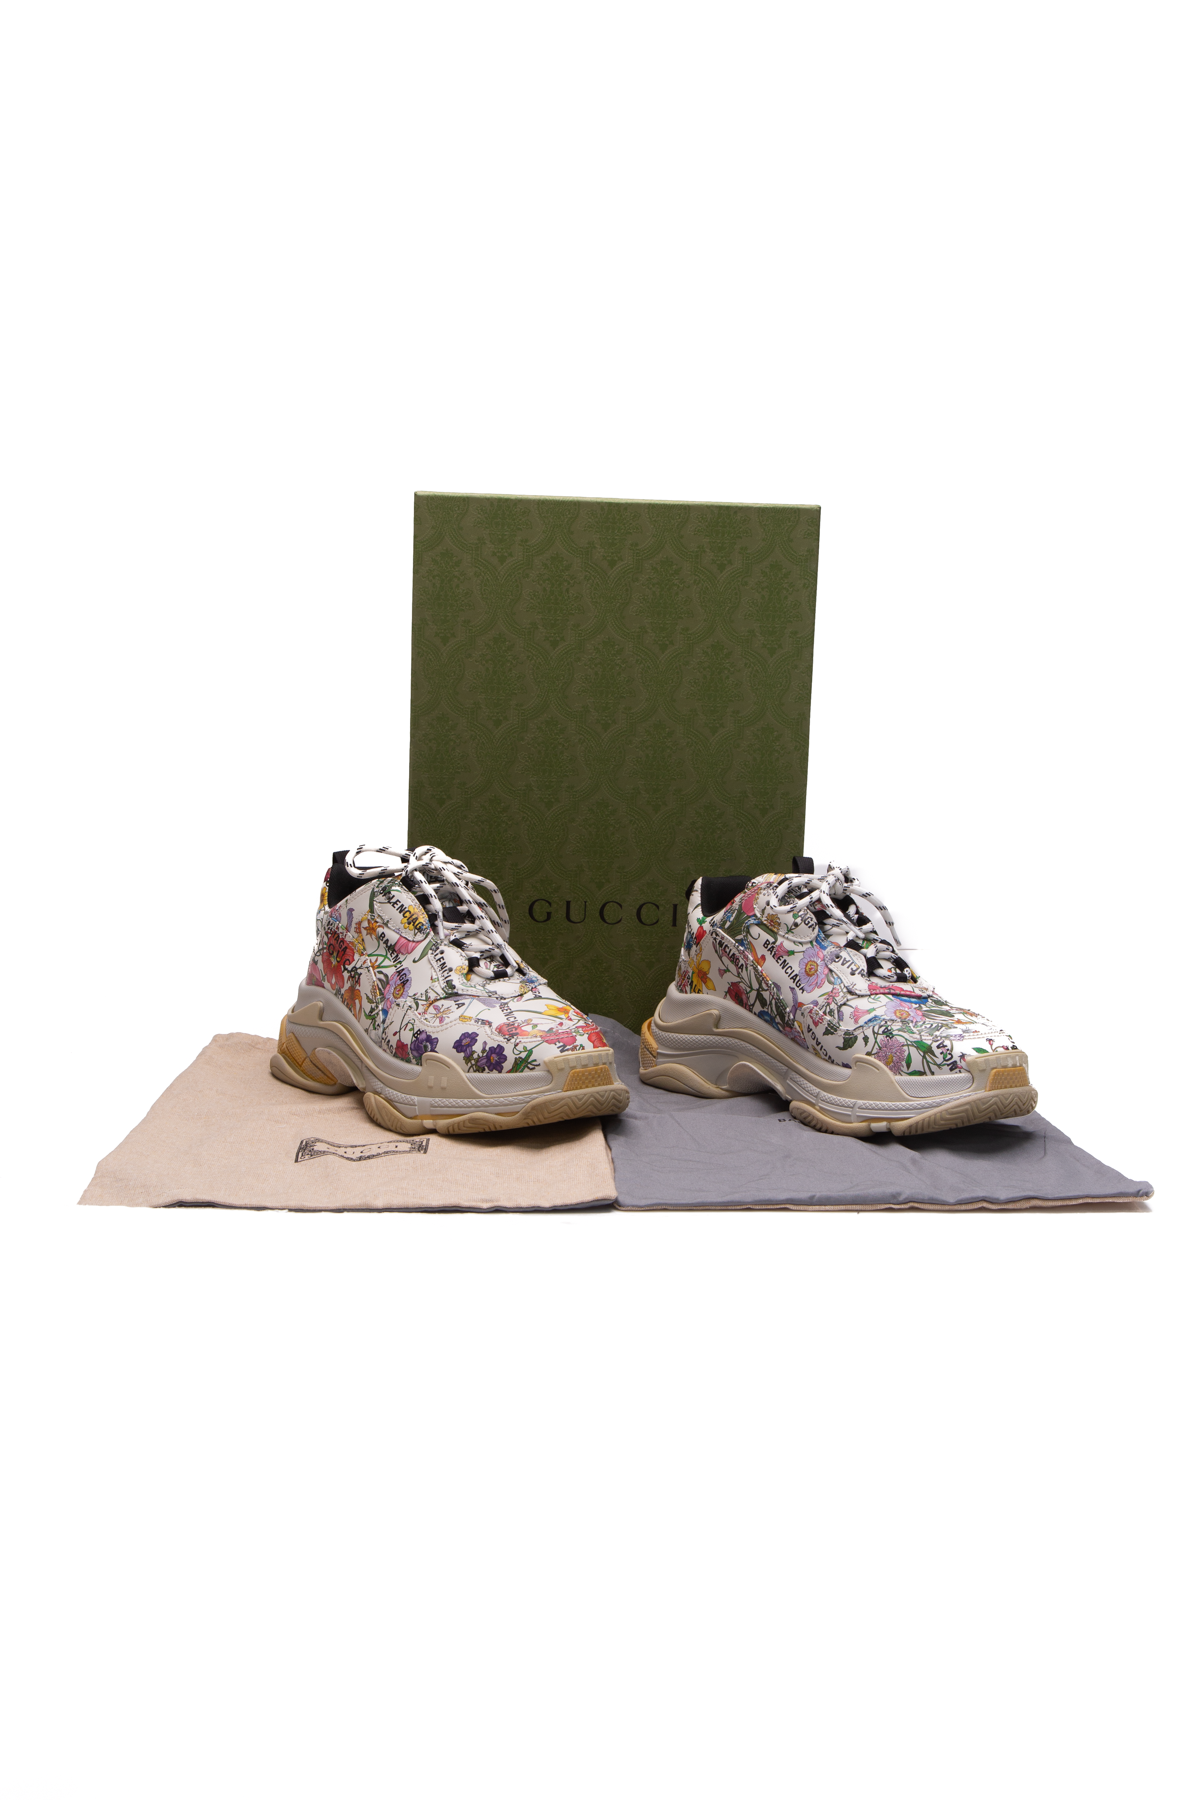 Gucci Men's Gucci x Balenciaga Flora Triple S Sneakers - US Size 11